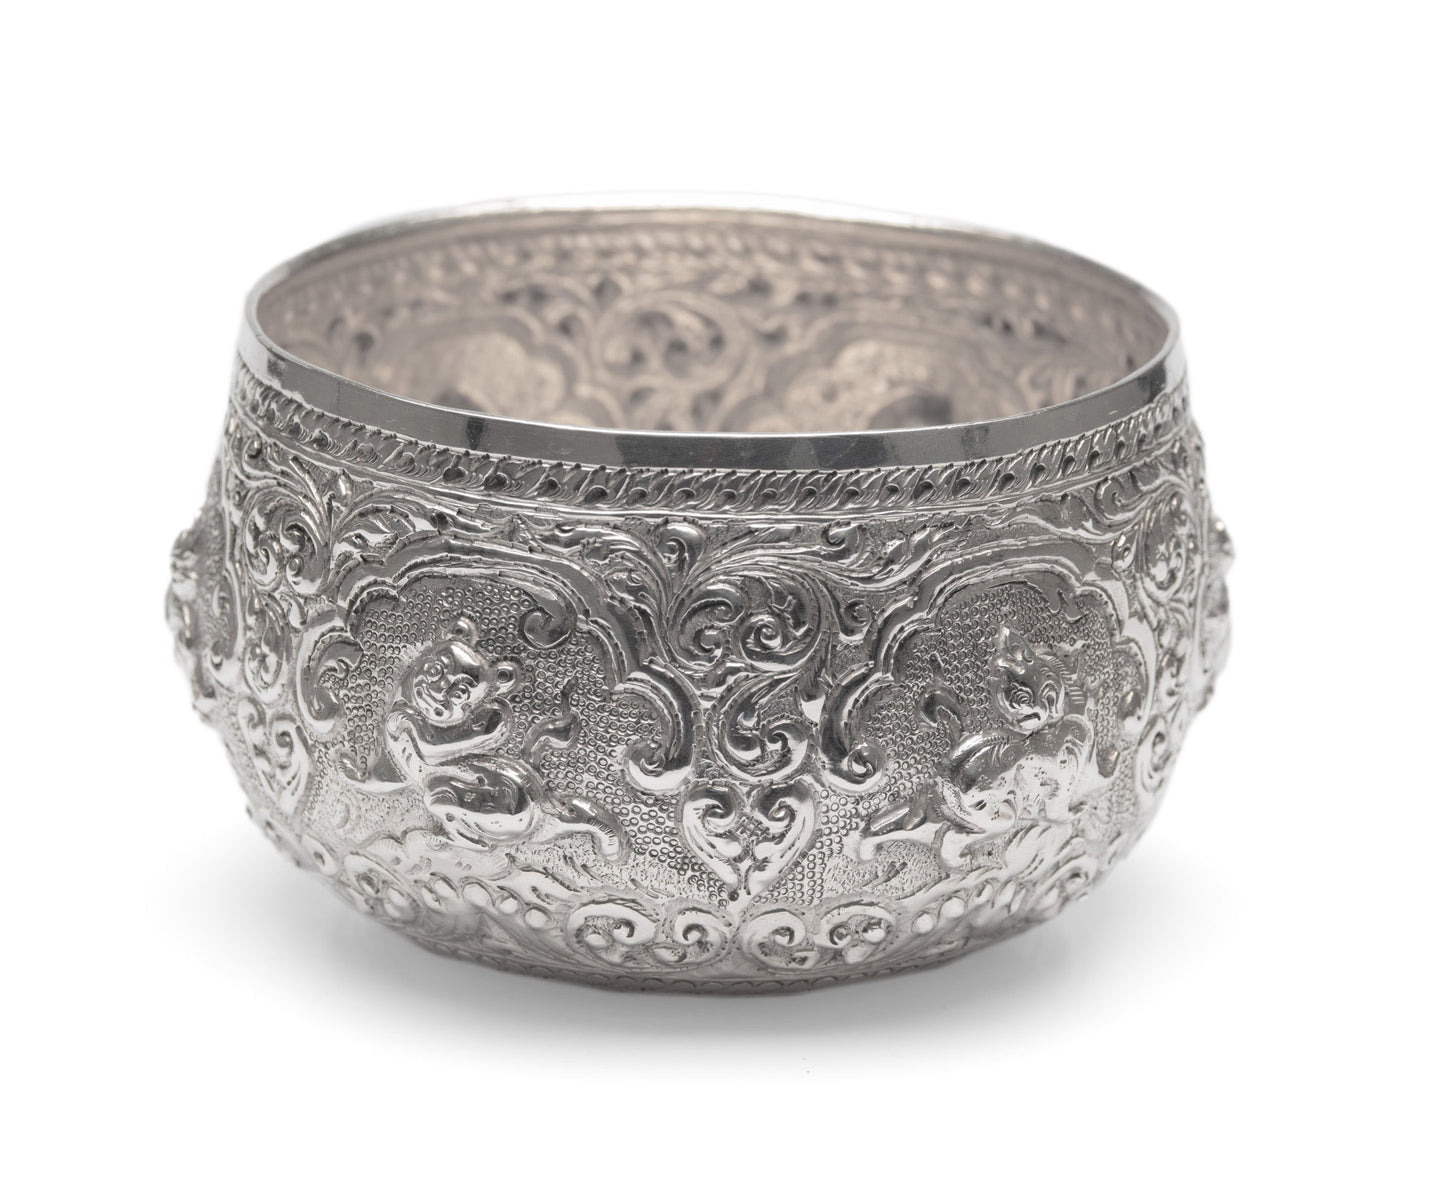 Antique Burmese Silver Thabeik Bowl with Repousse Fantastical Creatures (Code 2572)